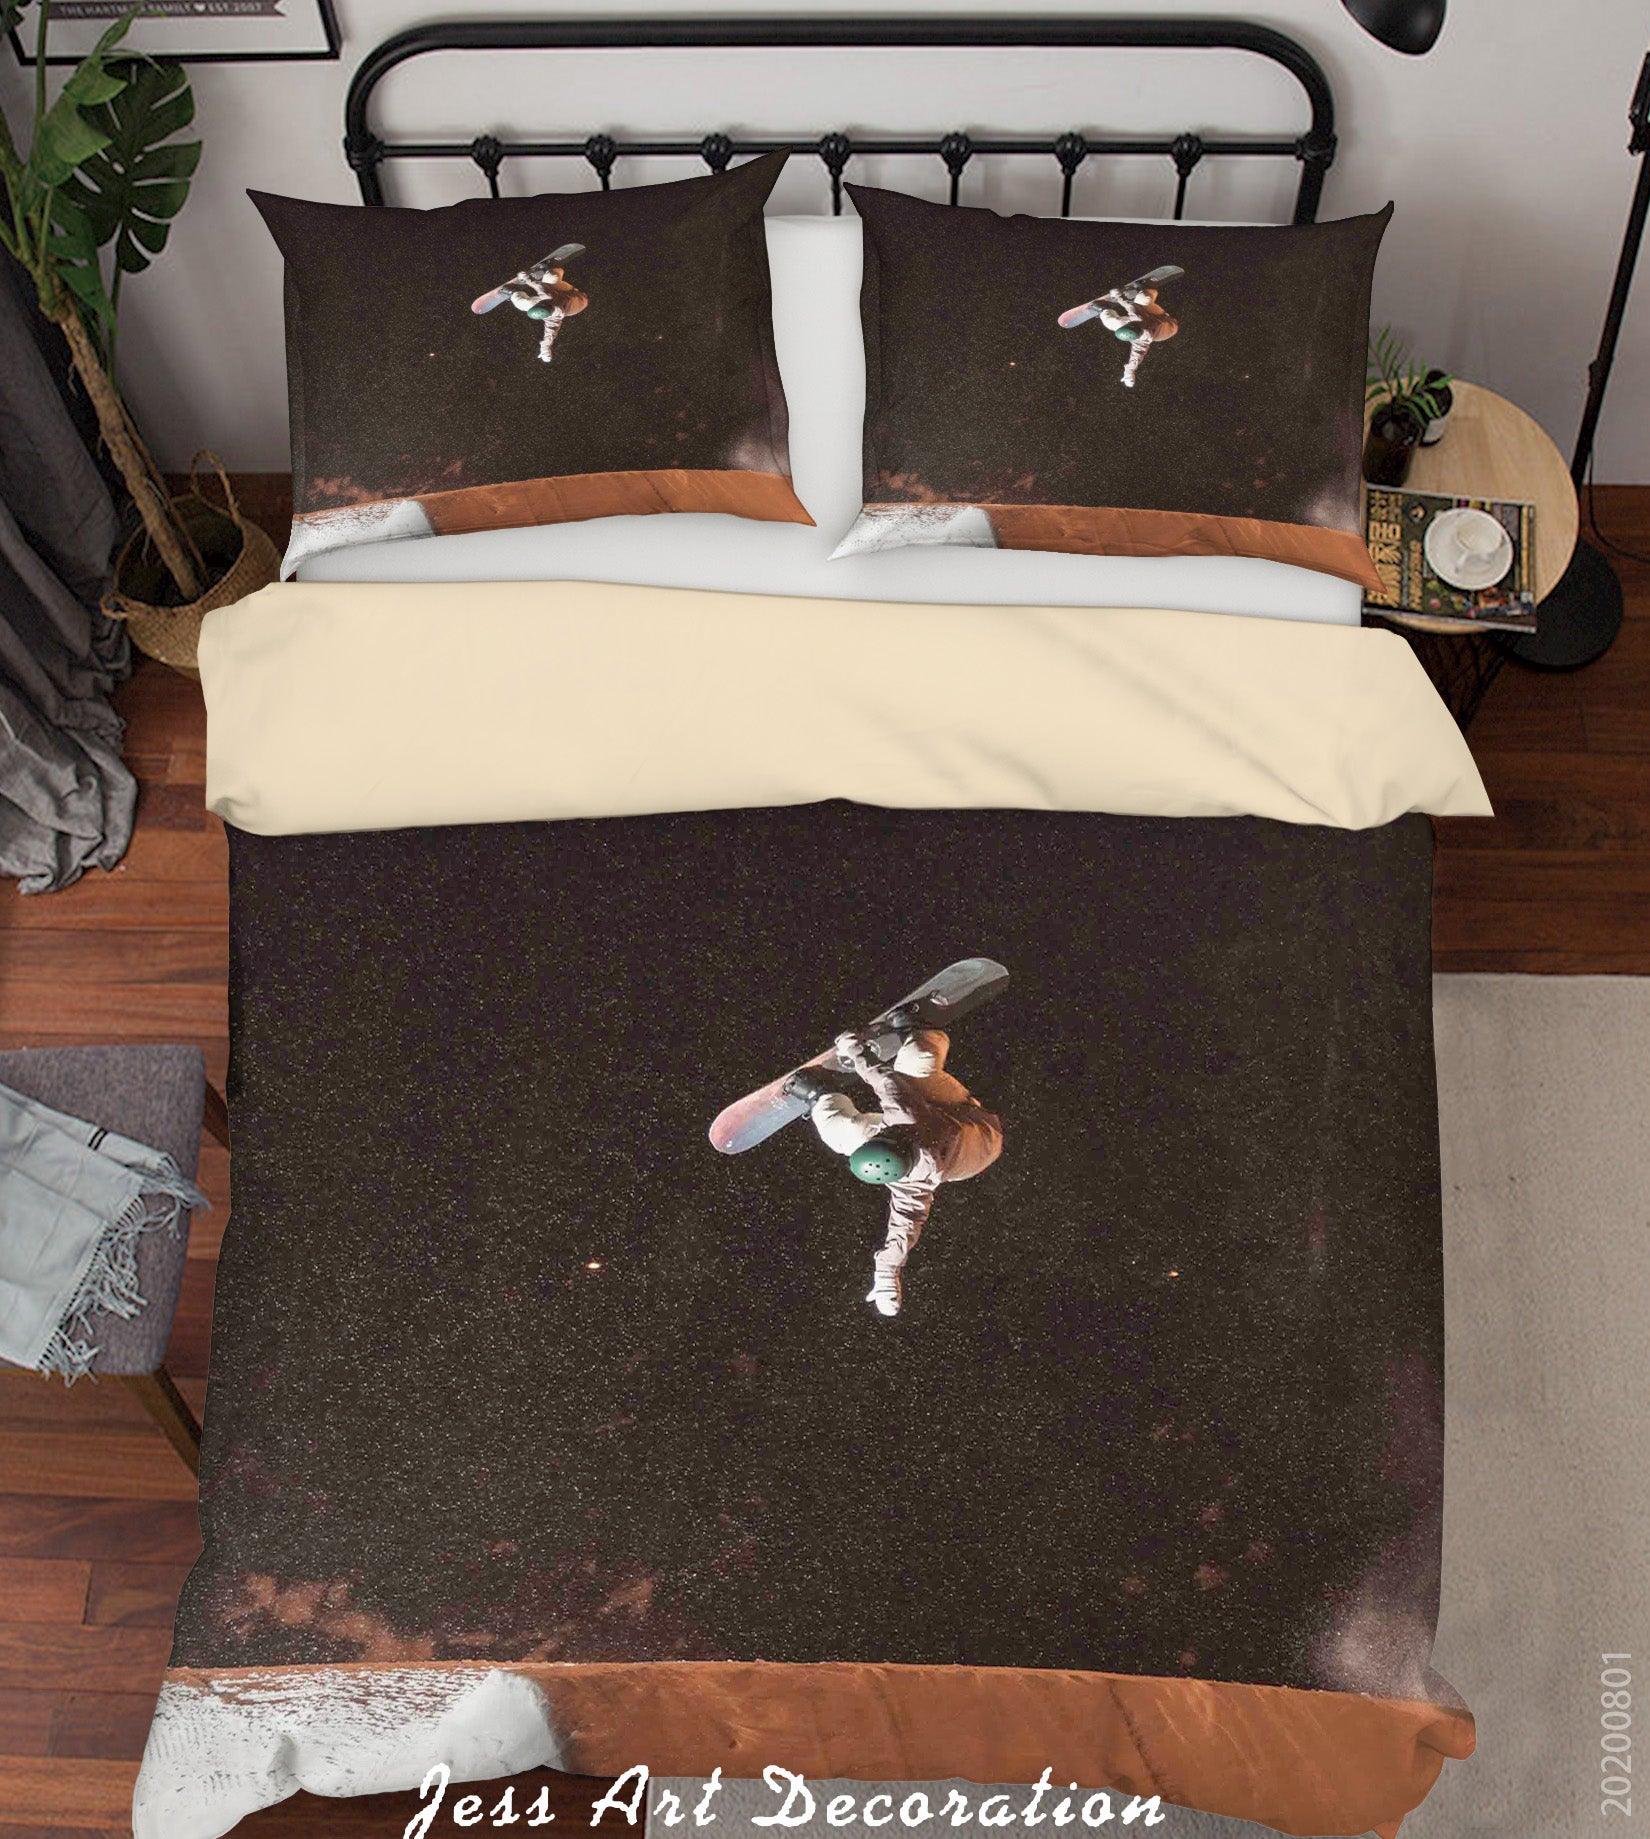 3D Skiing Man Quilt Cover Set Bedding Set Duvet Cover Pillowcases LXL 234- Jess Art Decoration